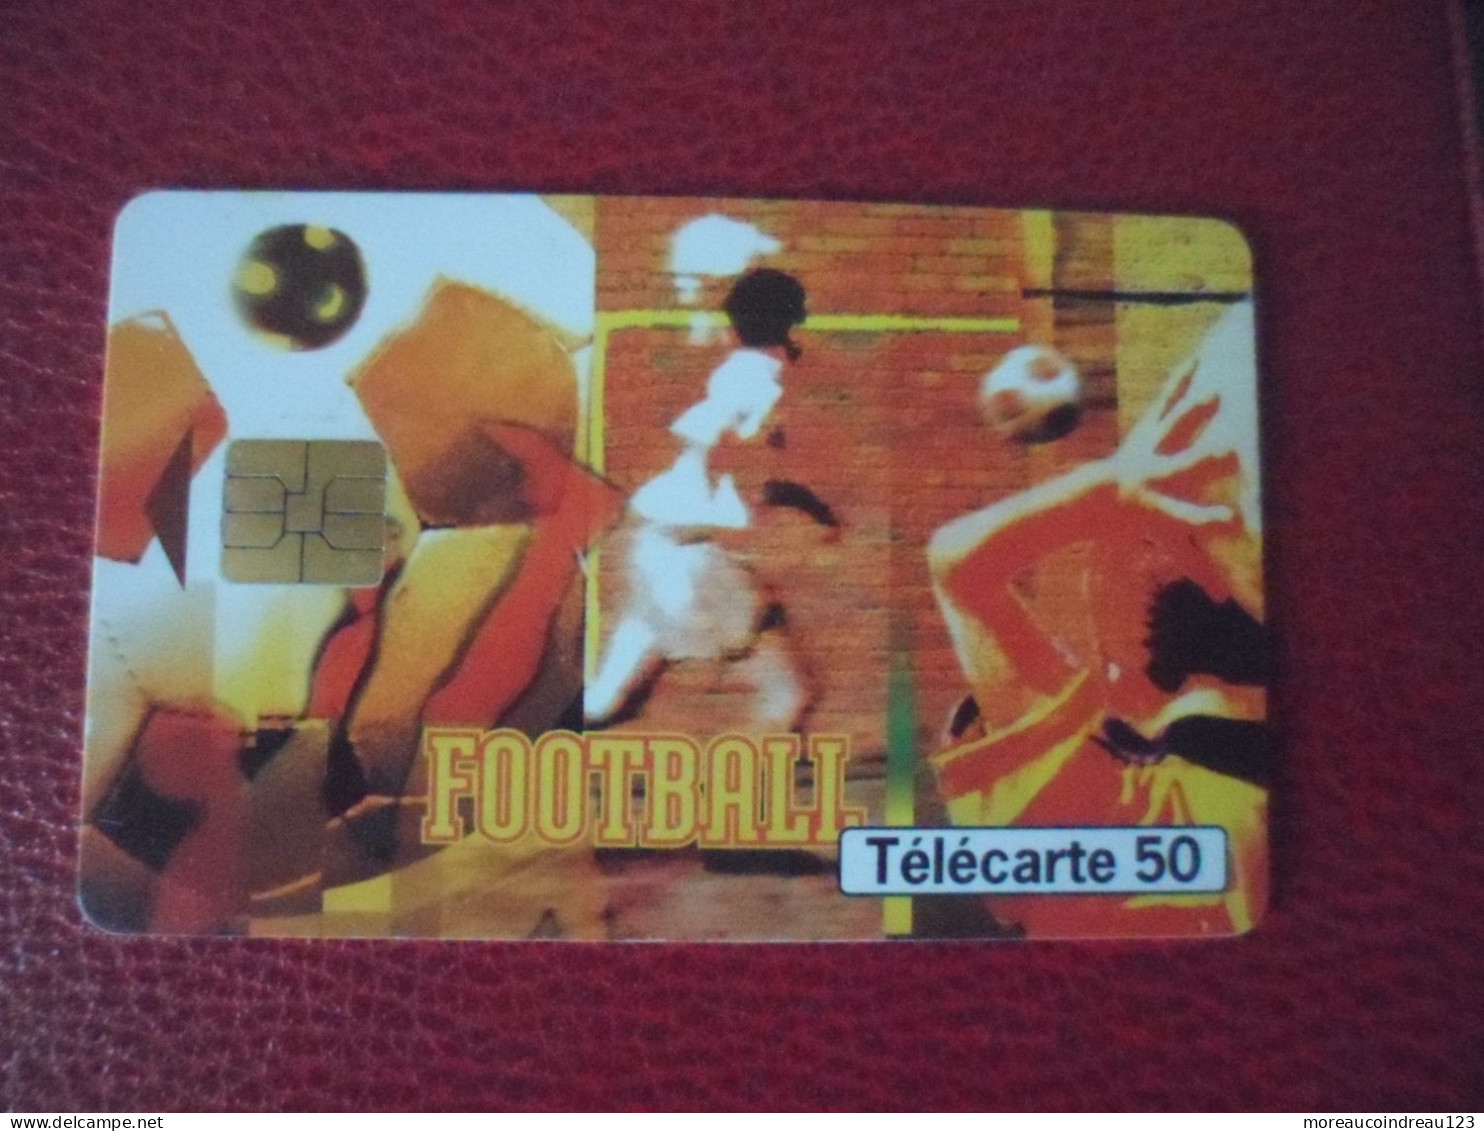 Télécarte France Télécom Street Culture 6 Football - Operatori Telecom